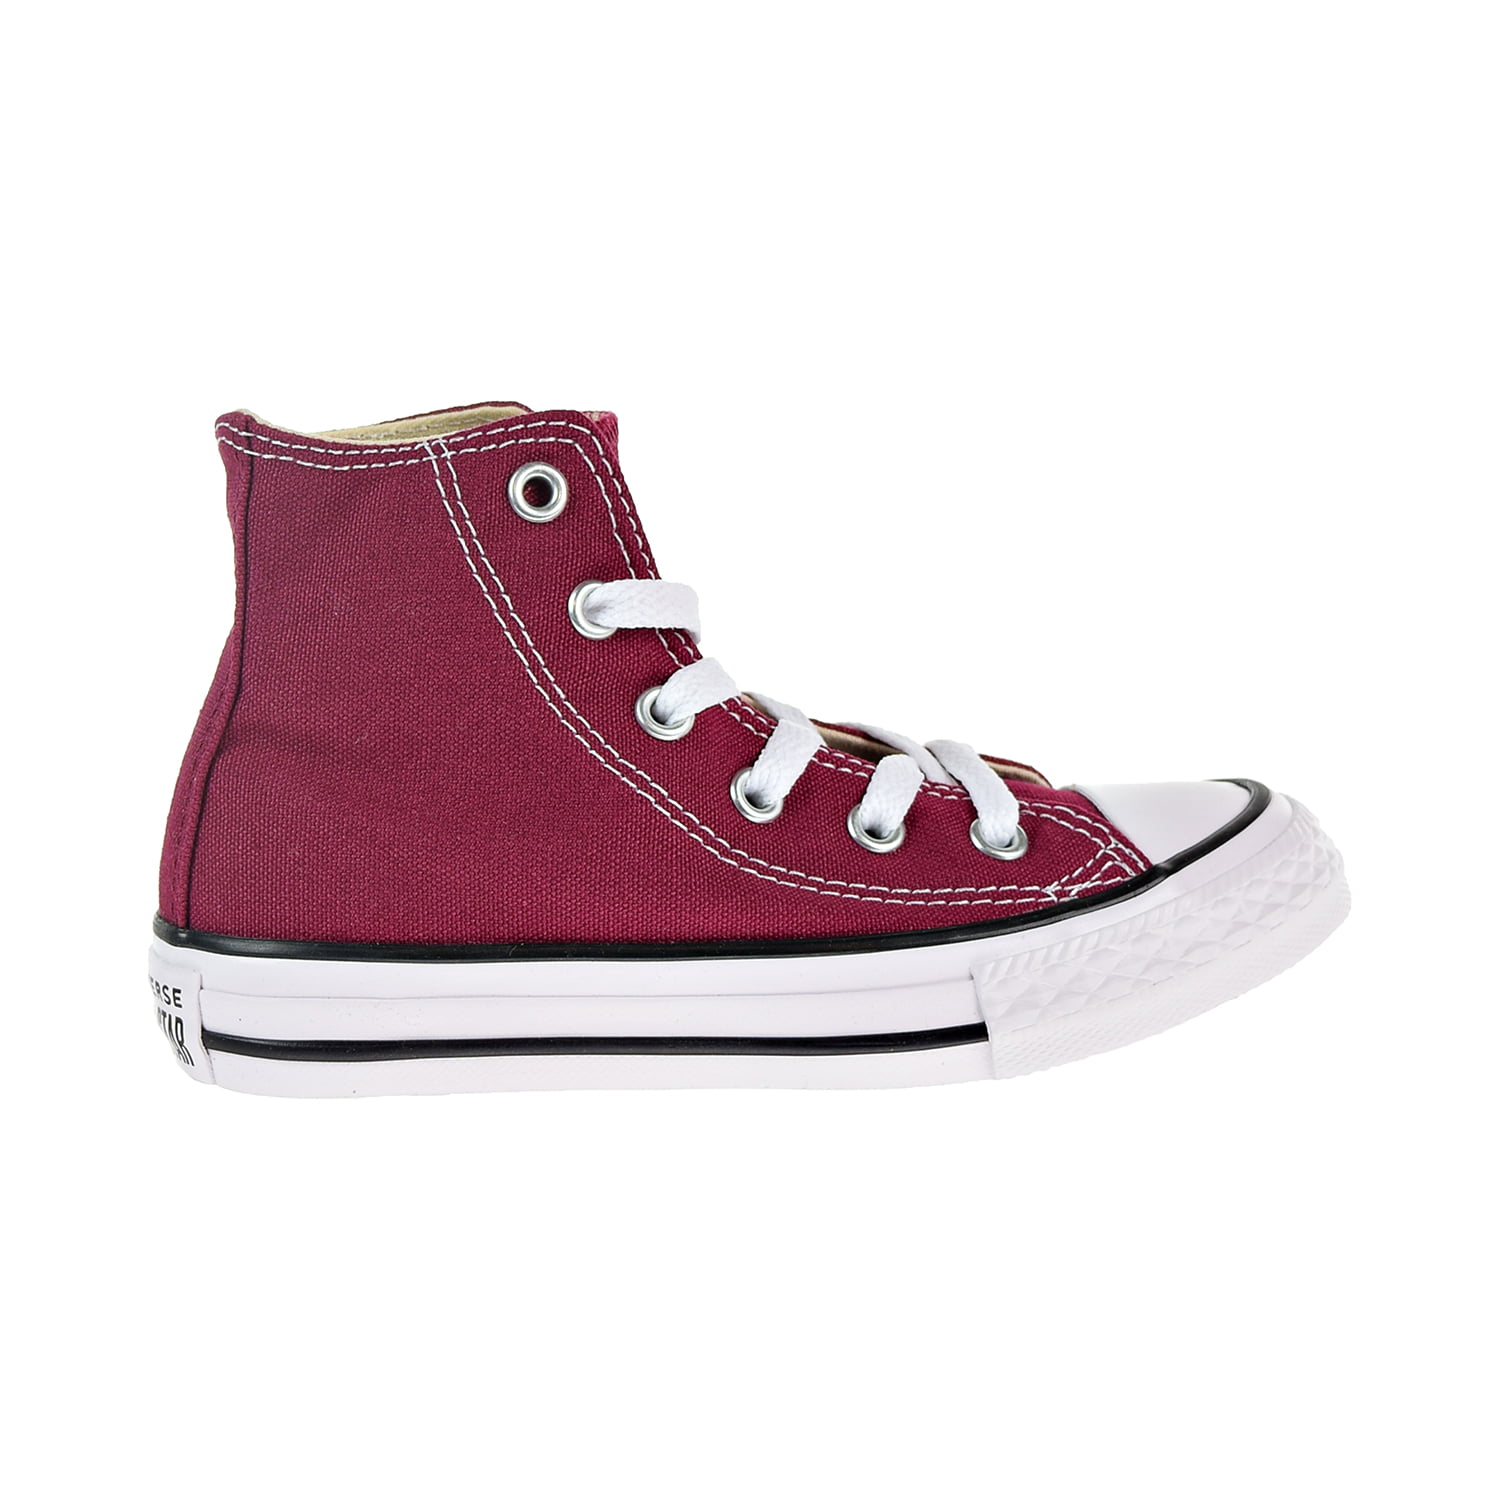 Converse Chuck Taylor All Star Hi Little Kids' Shoes Maroon 348437f -  